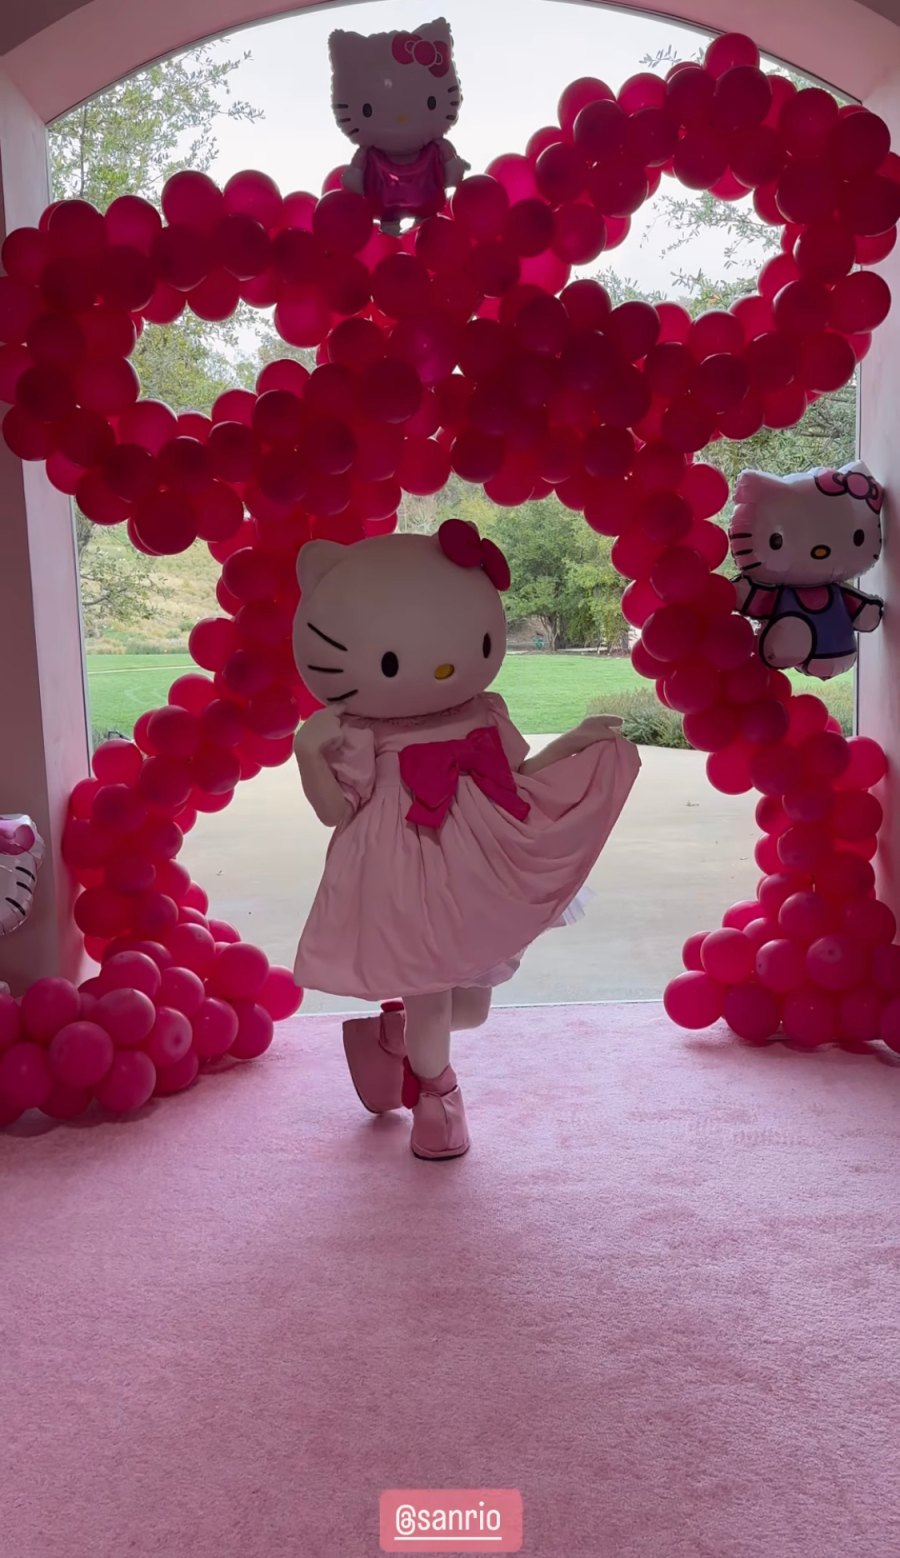 Kim Kardashian Throws Hello Kitty Party for Daughter Chicago's 5th Birthday